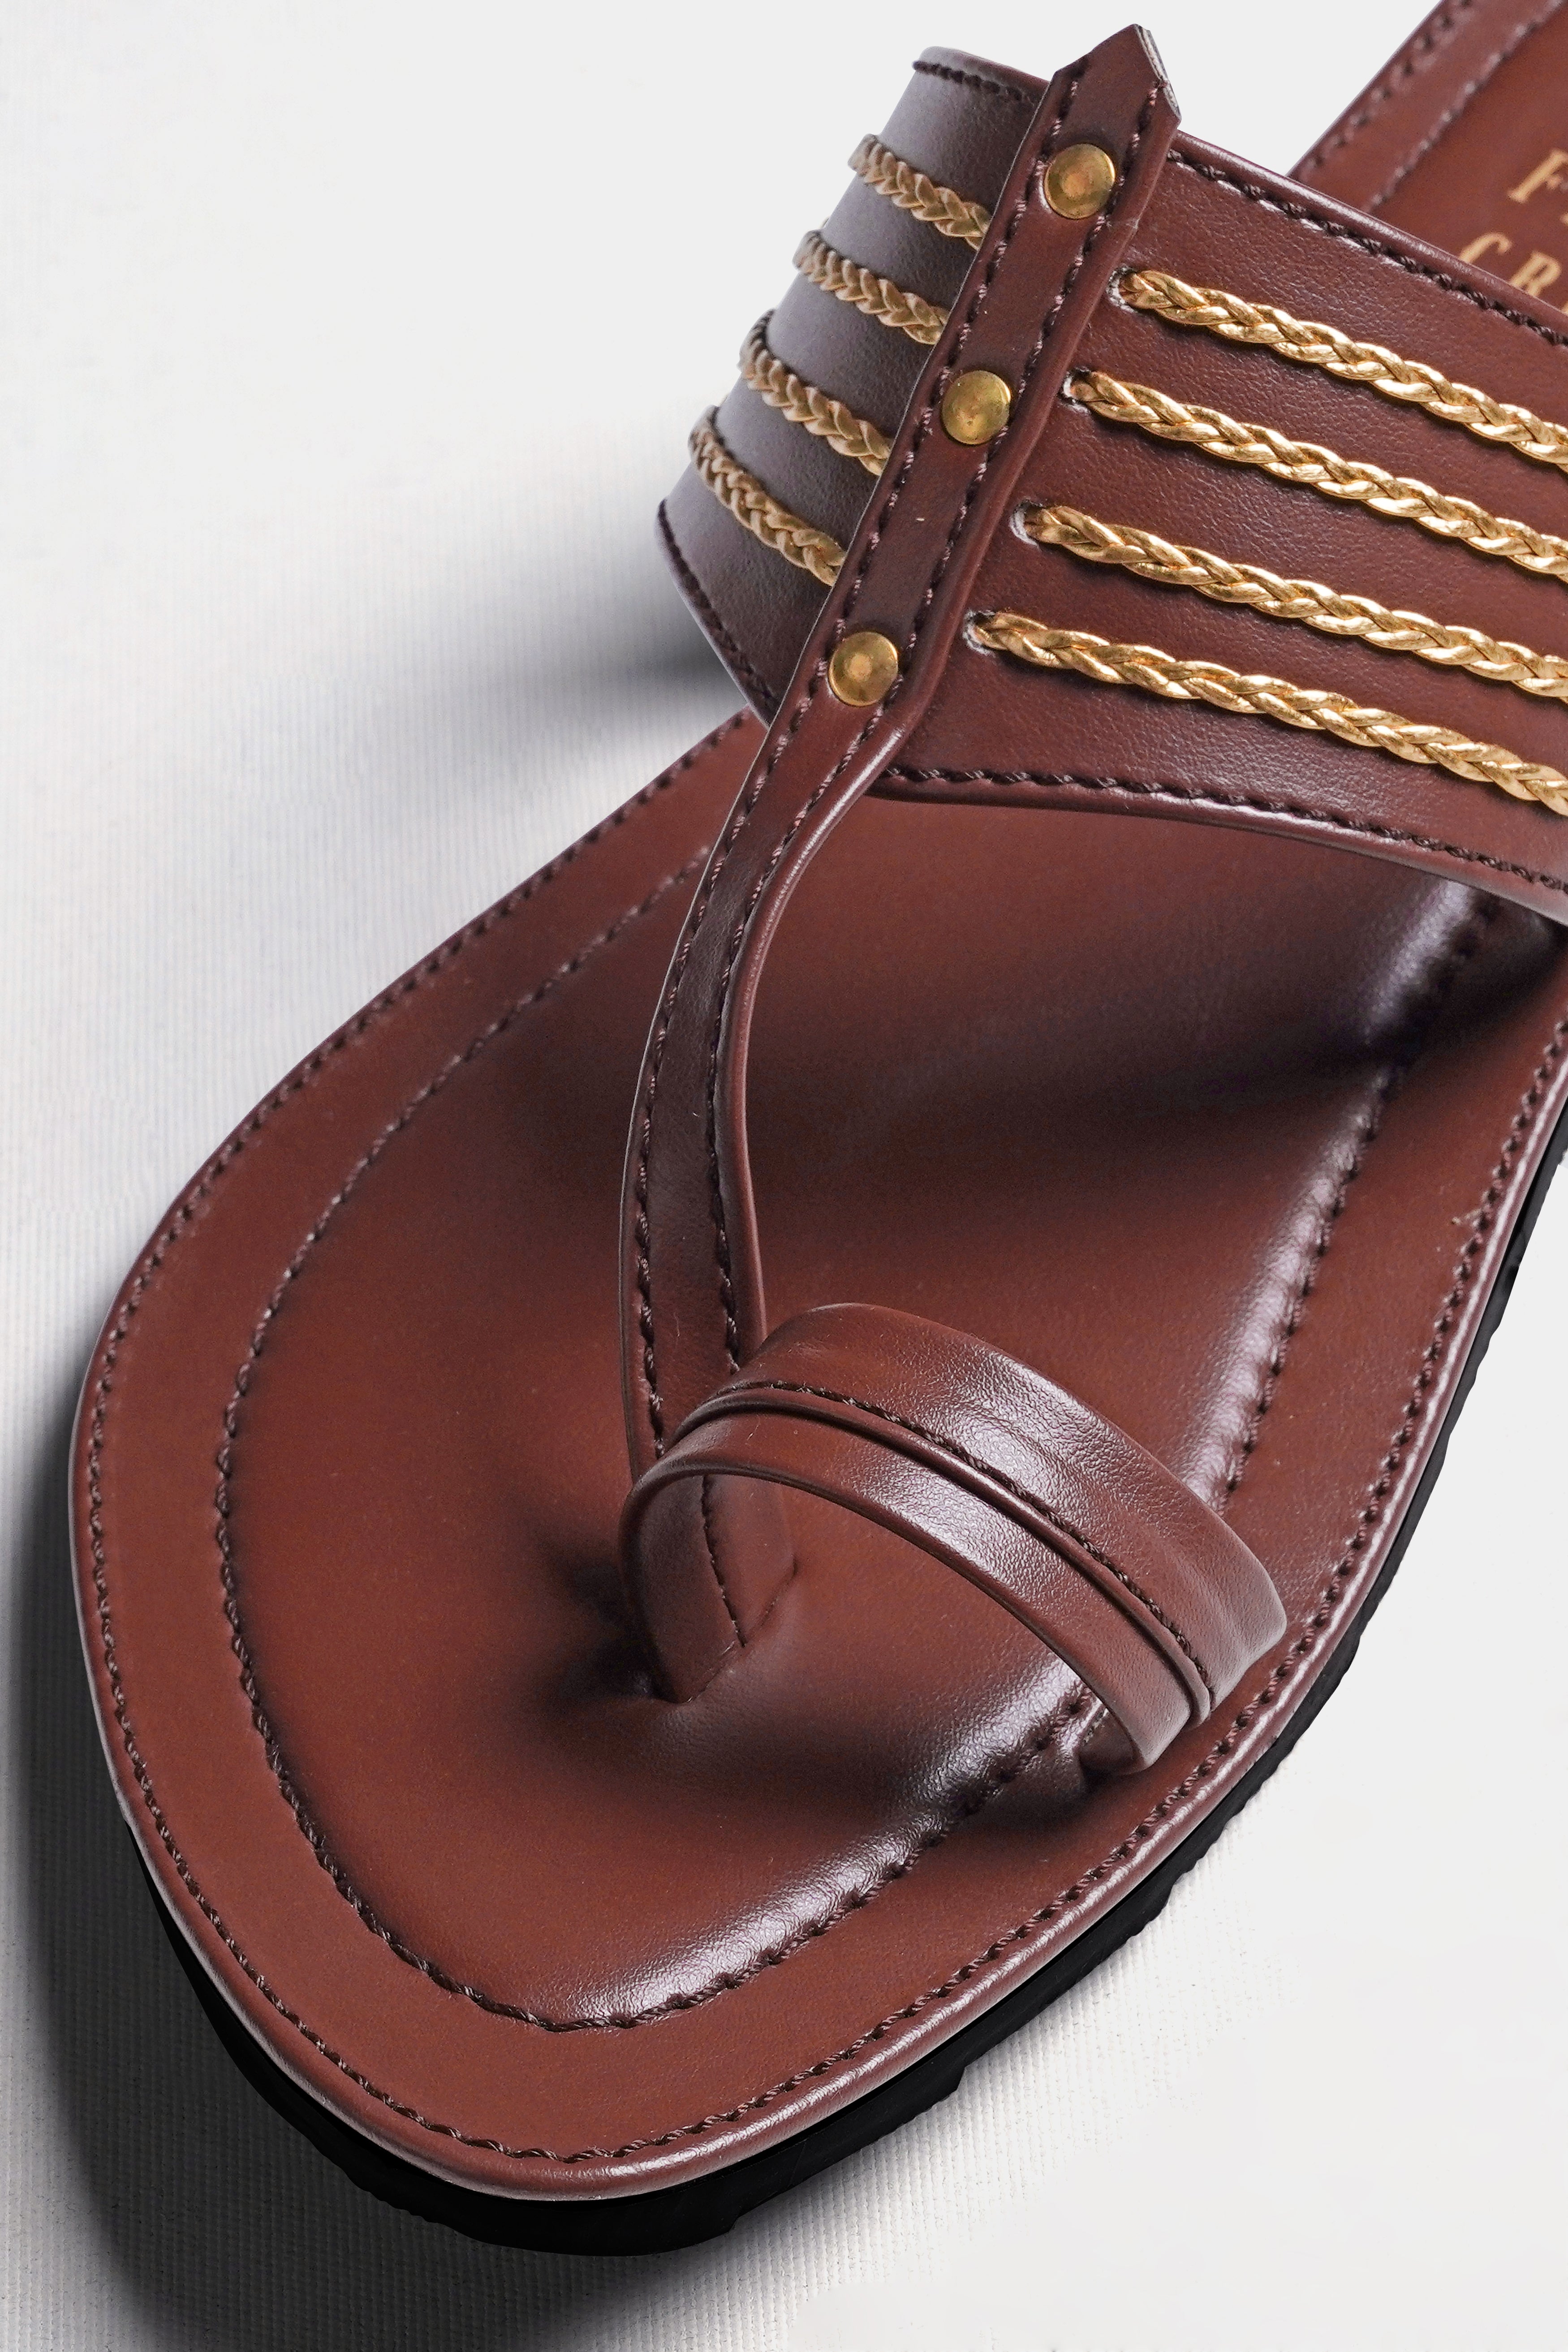 Brown with Golden Stitched Vegan Leather Kolhapuri Sandal FT153-6, FT153-7, FT153-8, FT153-9, FT153-10, FT153-11